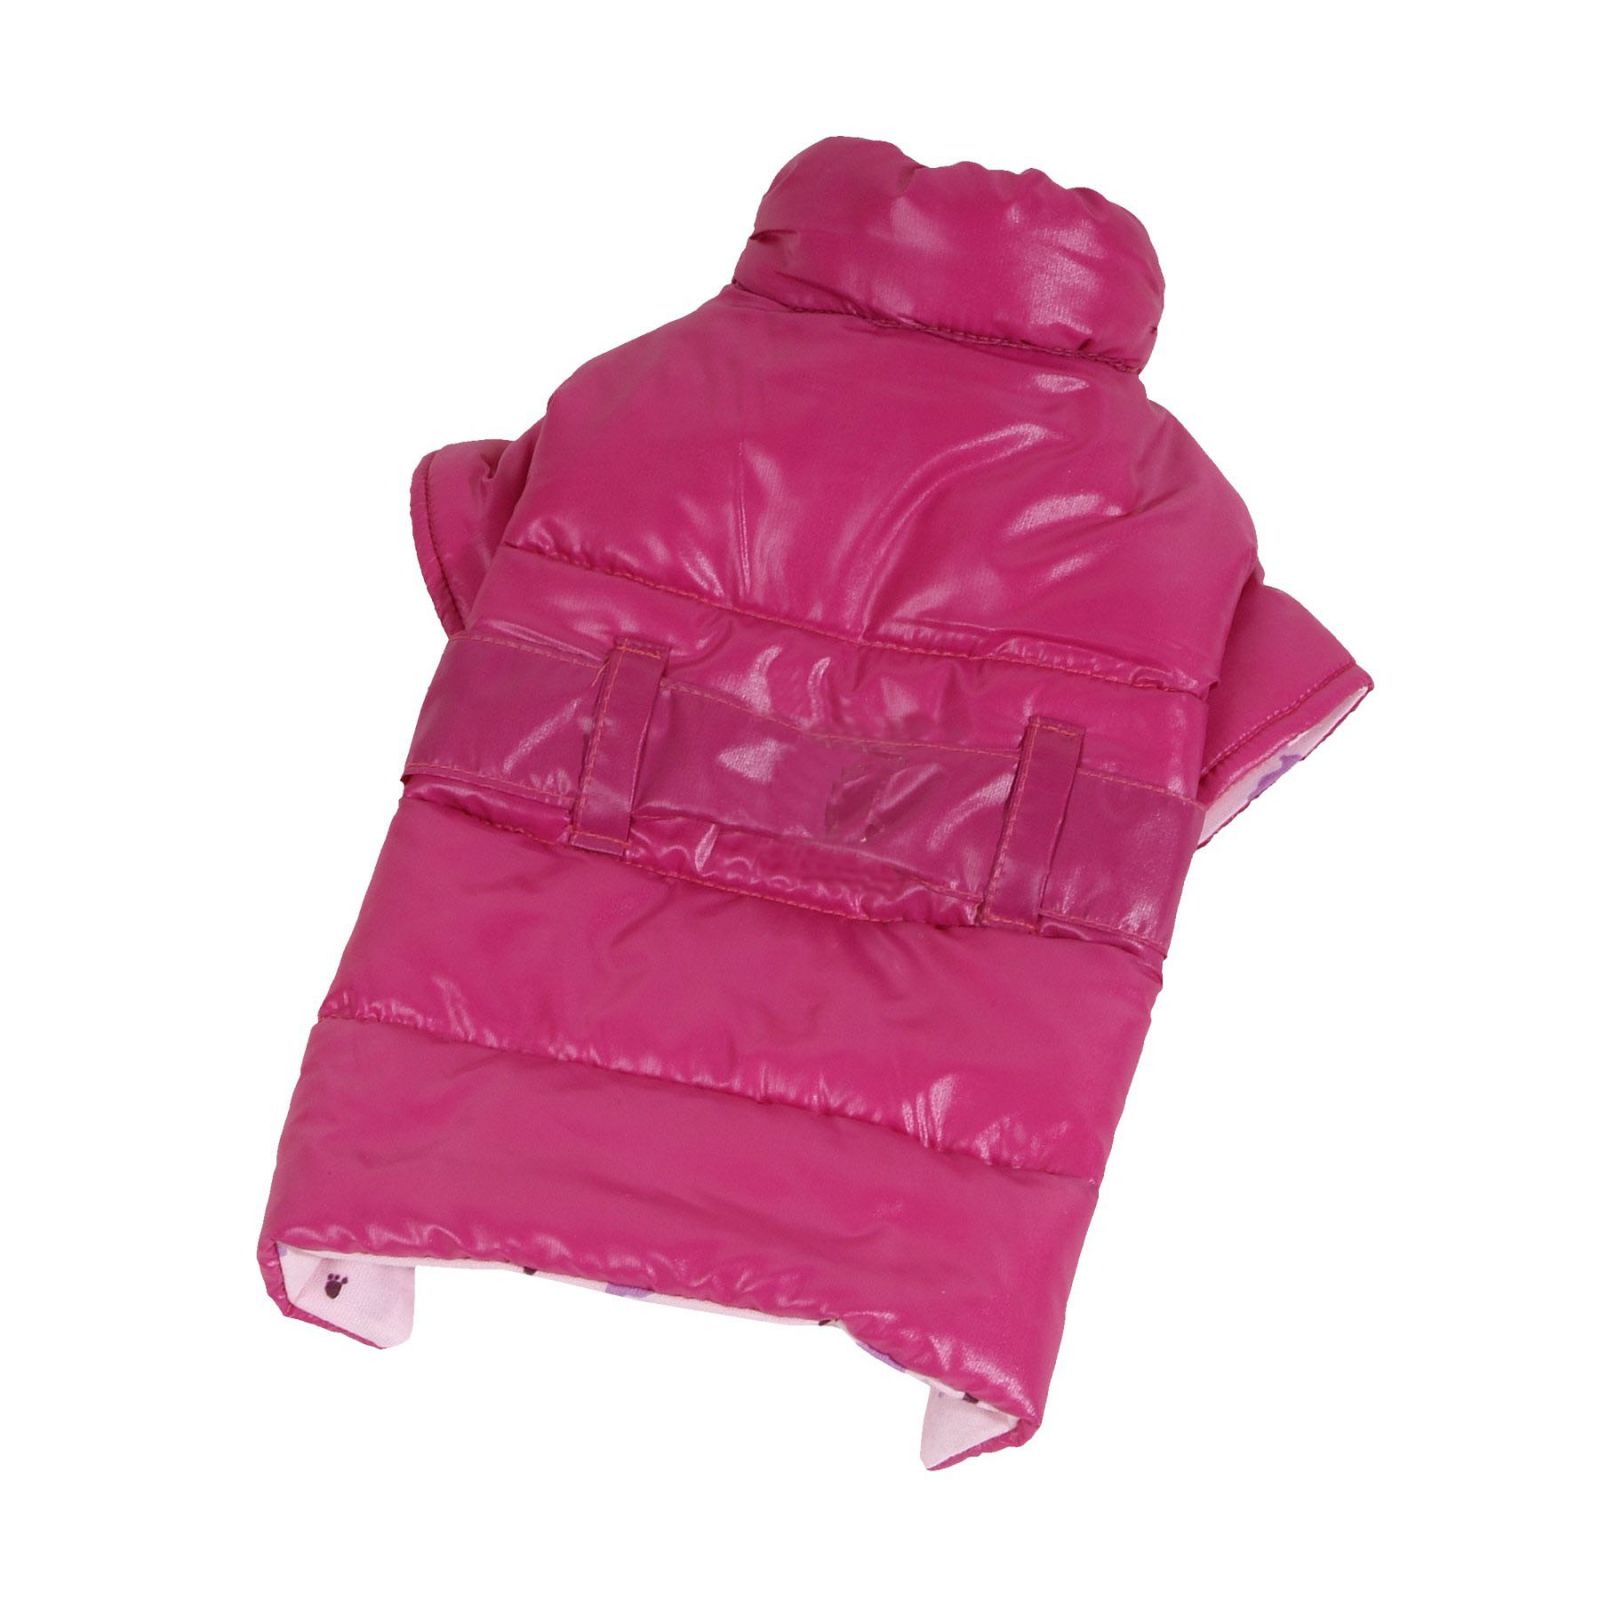 Kabátek De Luxe - růžová (doprodej skladových zásob) M I love pets